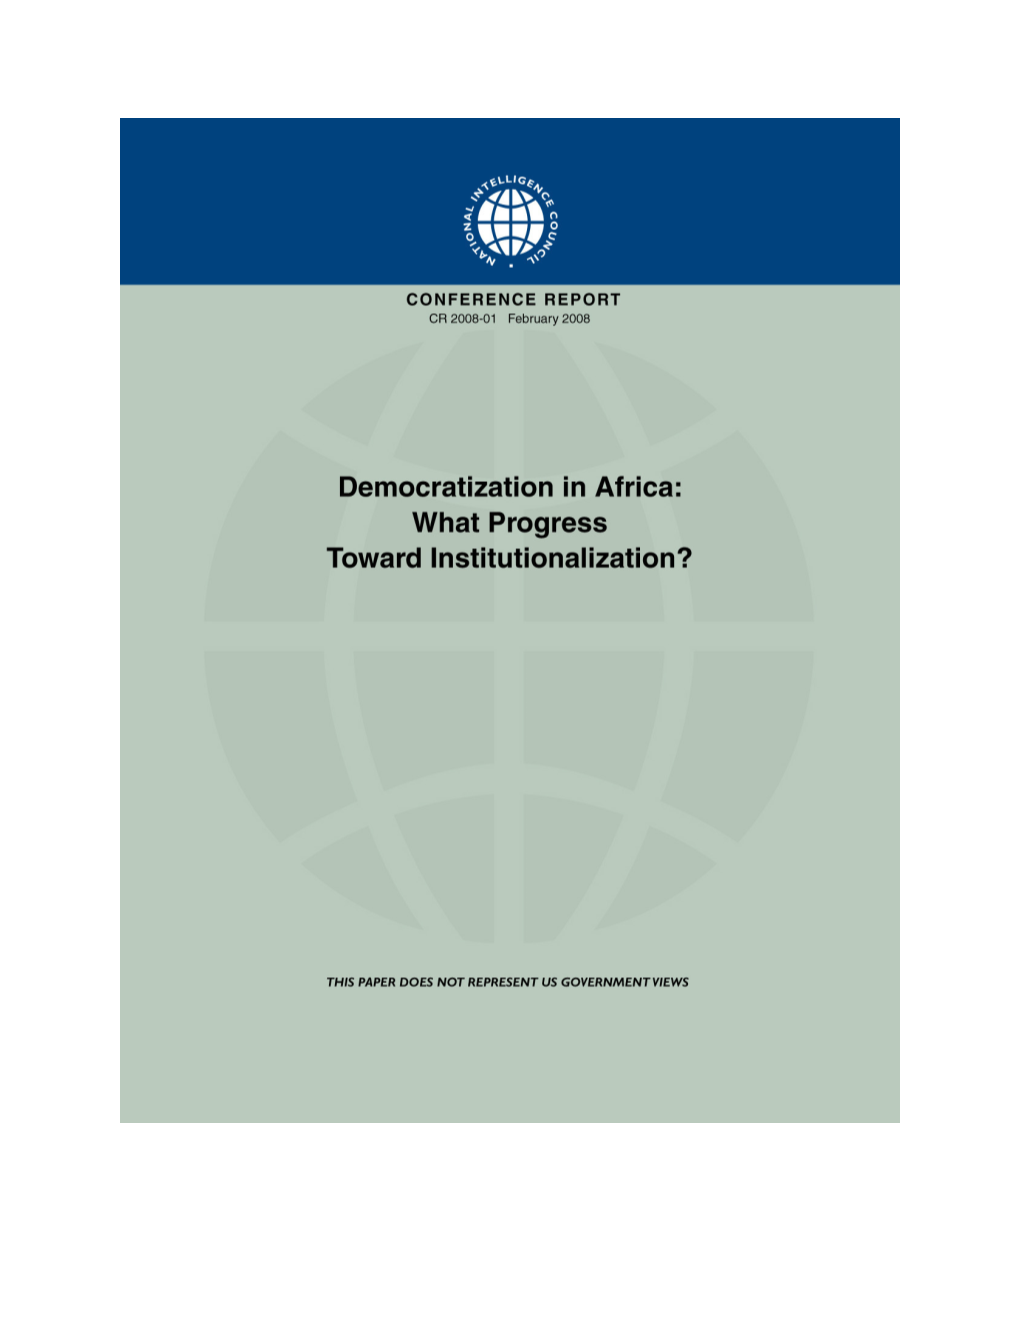 Democratization in Africa: What Progress Toward Institutionalization?